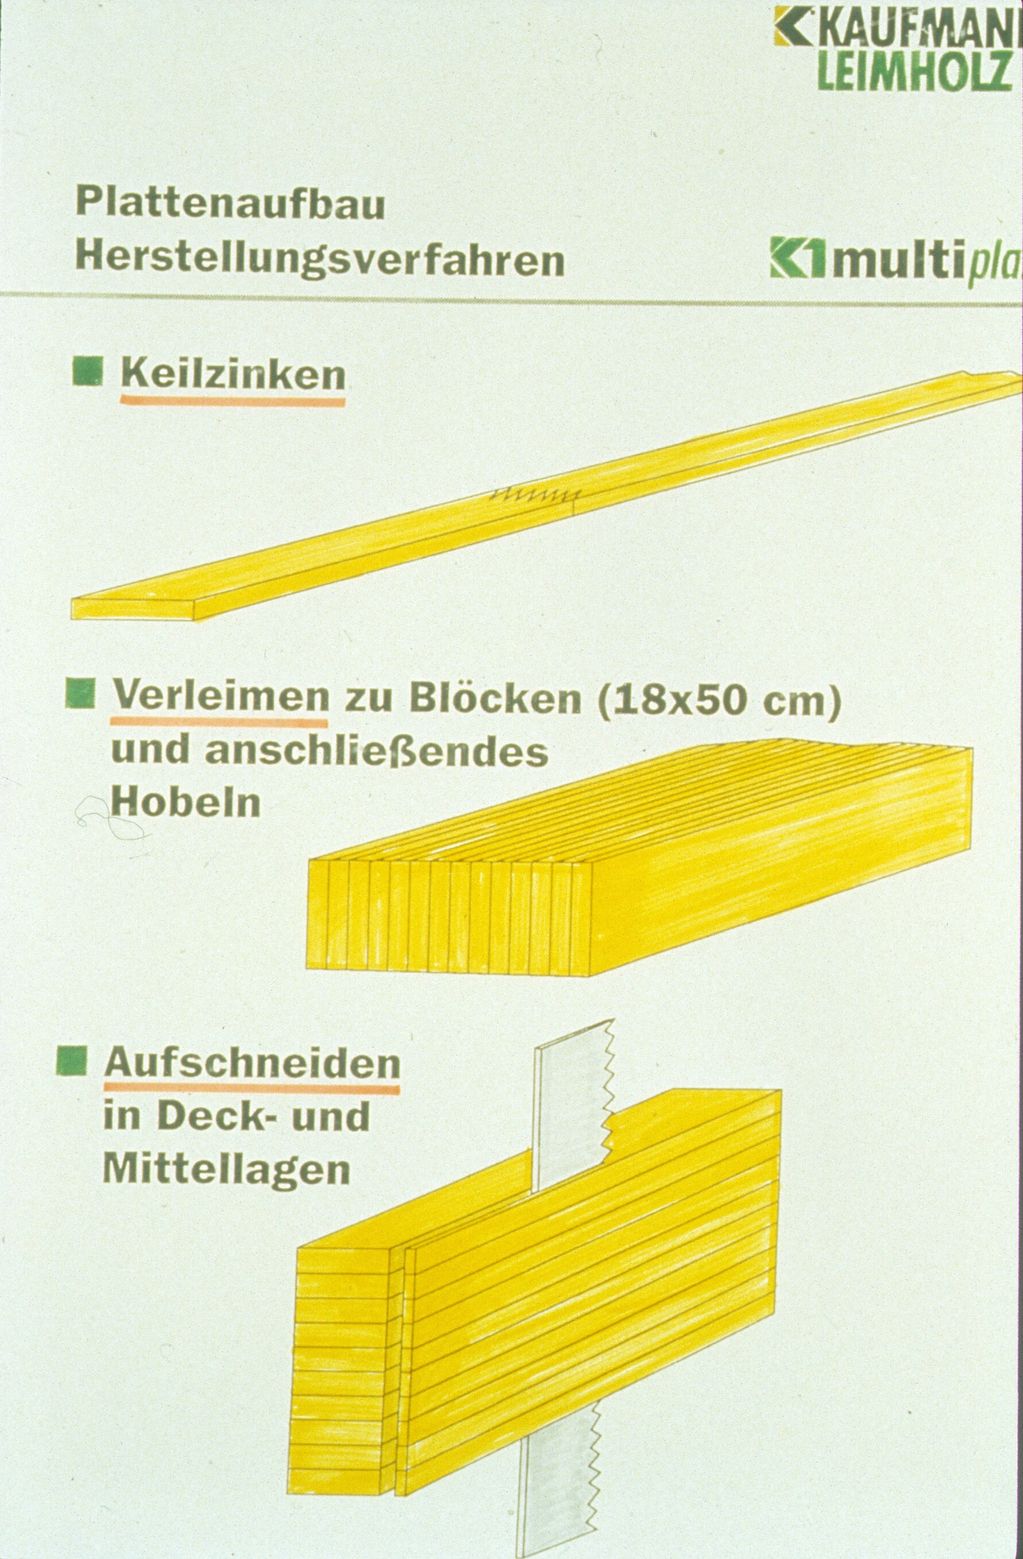 The basis material for "K1 multiplan" panels are glulam billets